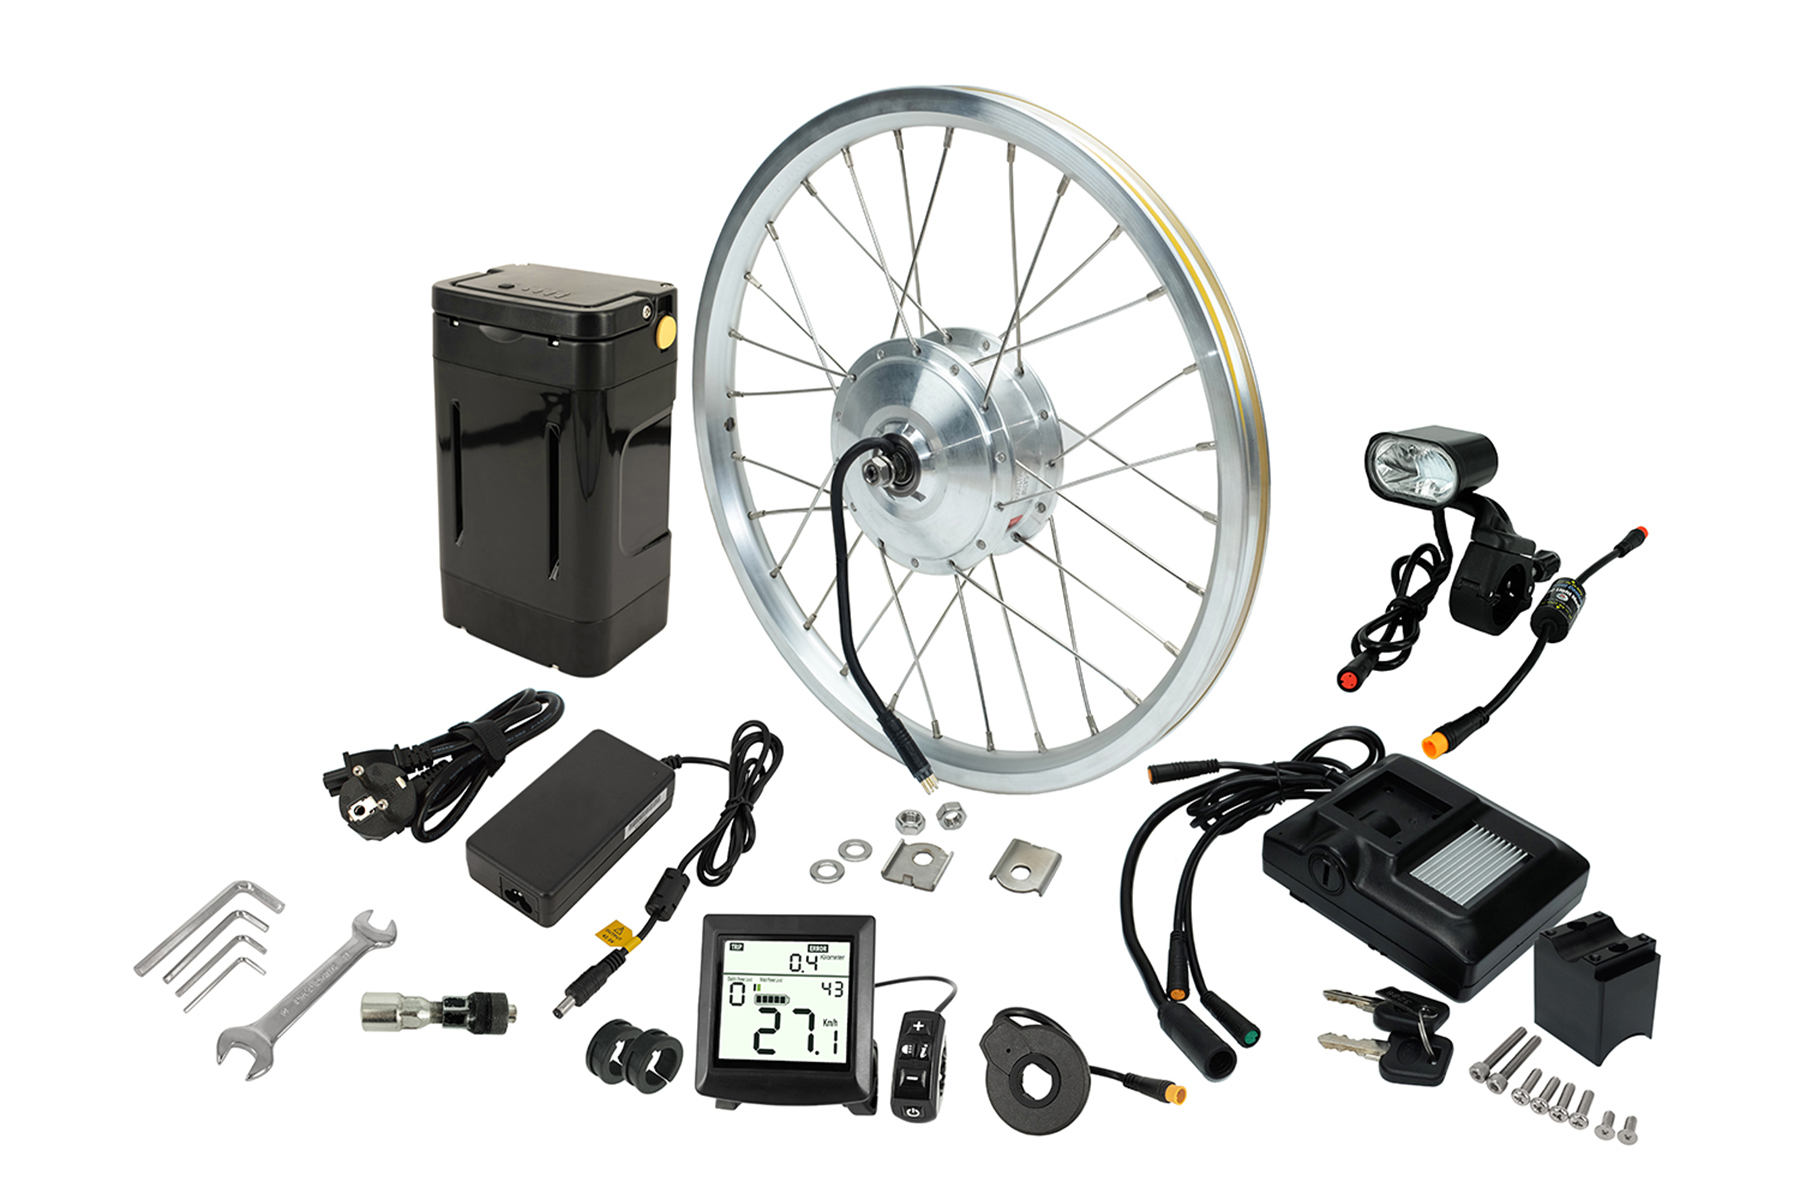 POWERSMART DIY Conversion Kit for E-Bike Akku, Brompton mini Folding Li-ion 75mm Volt, 36 mAh in Bike 8700 hub